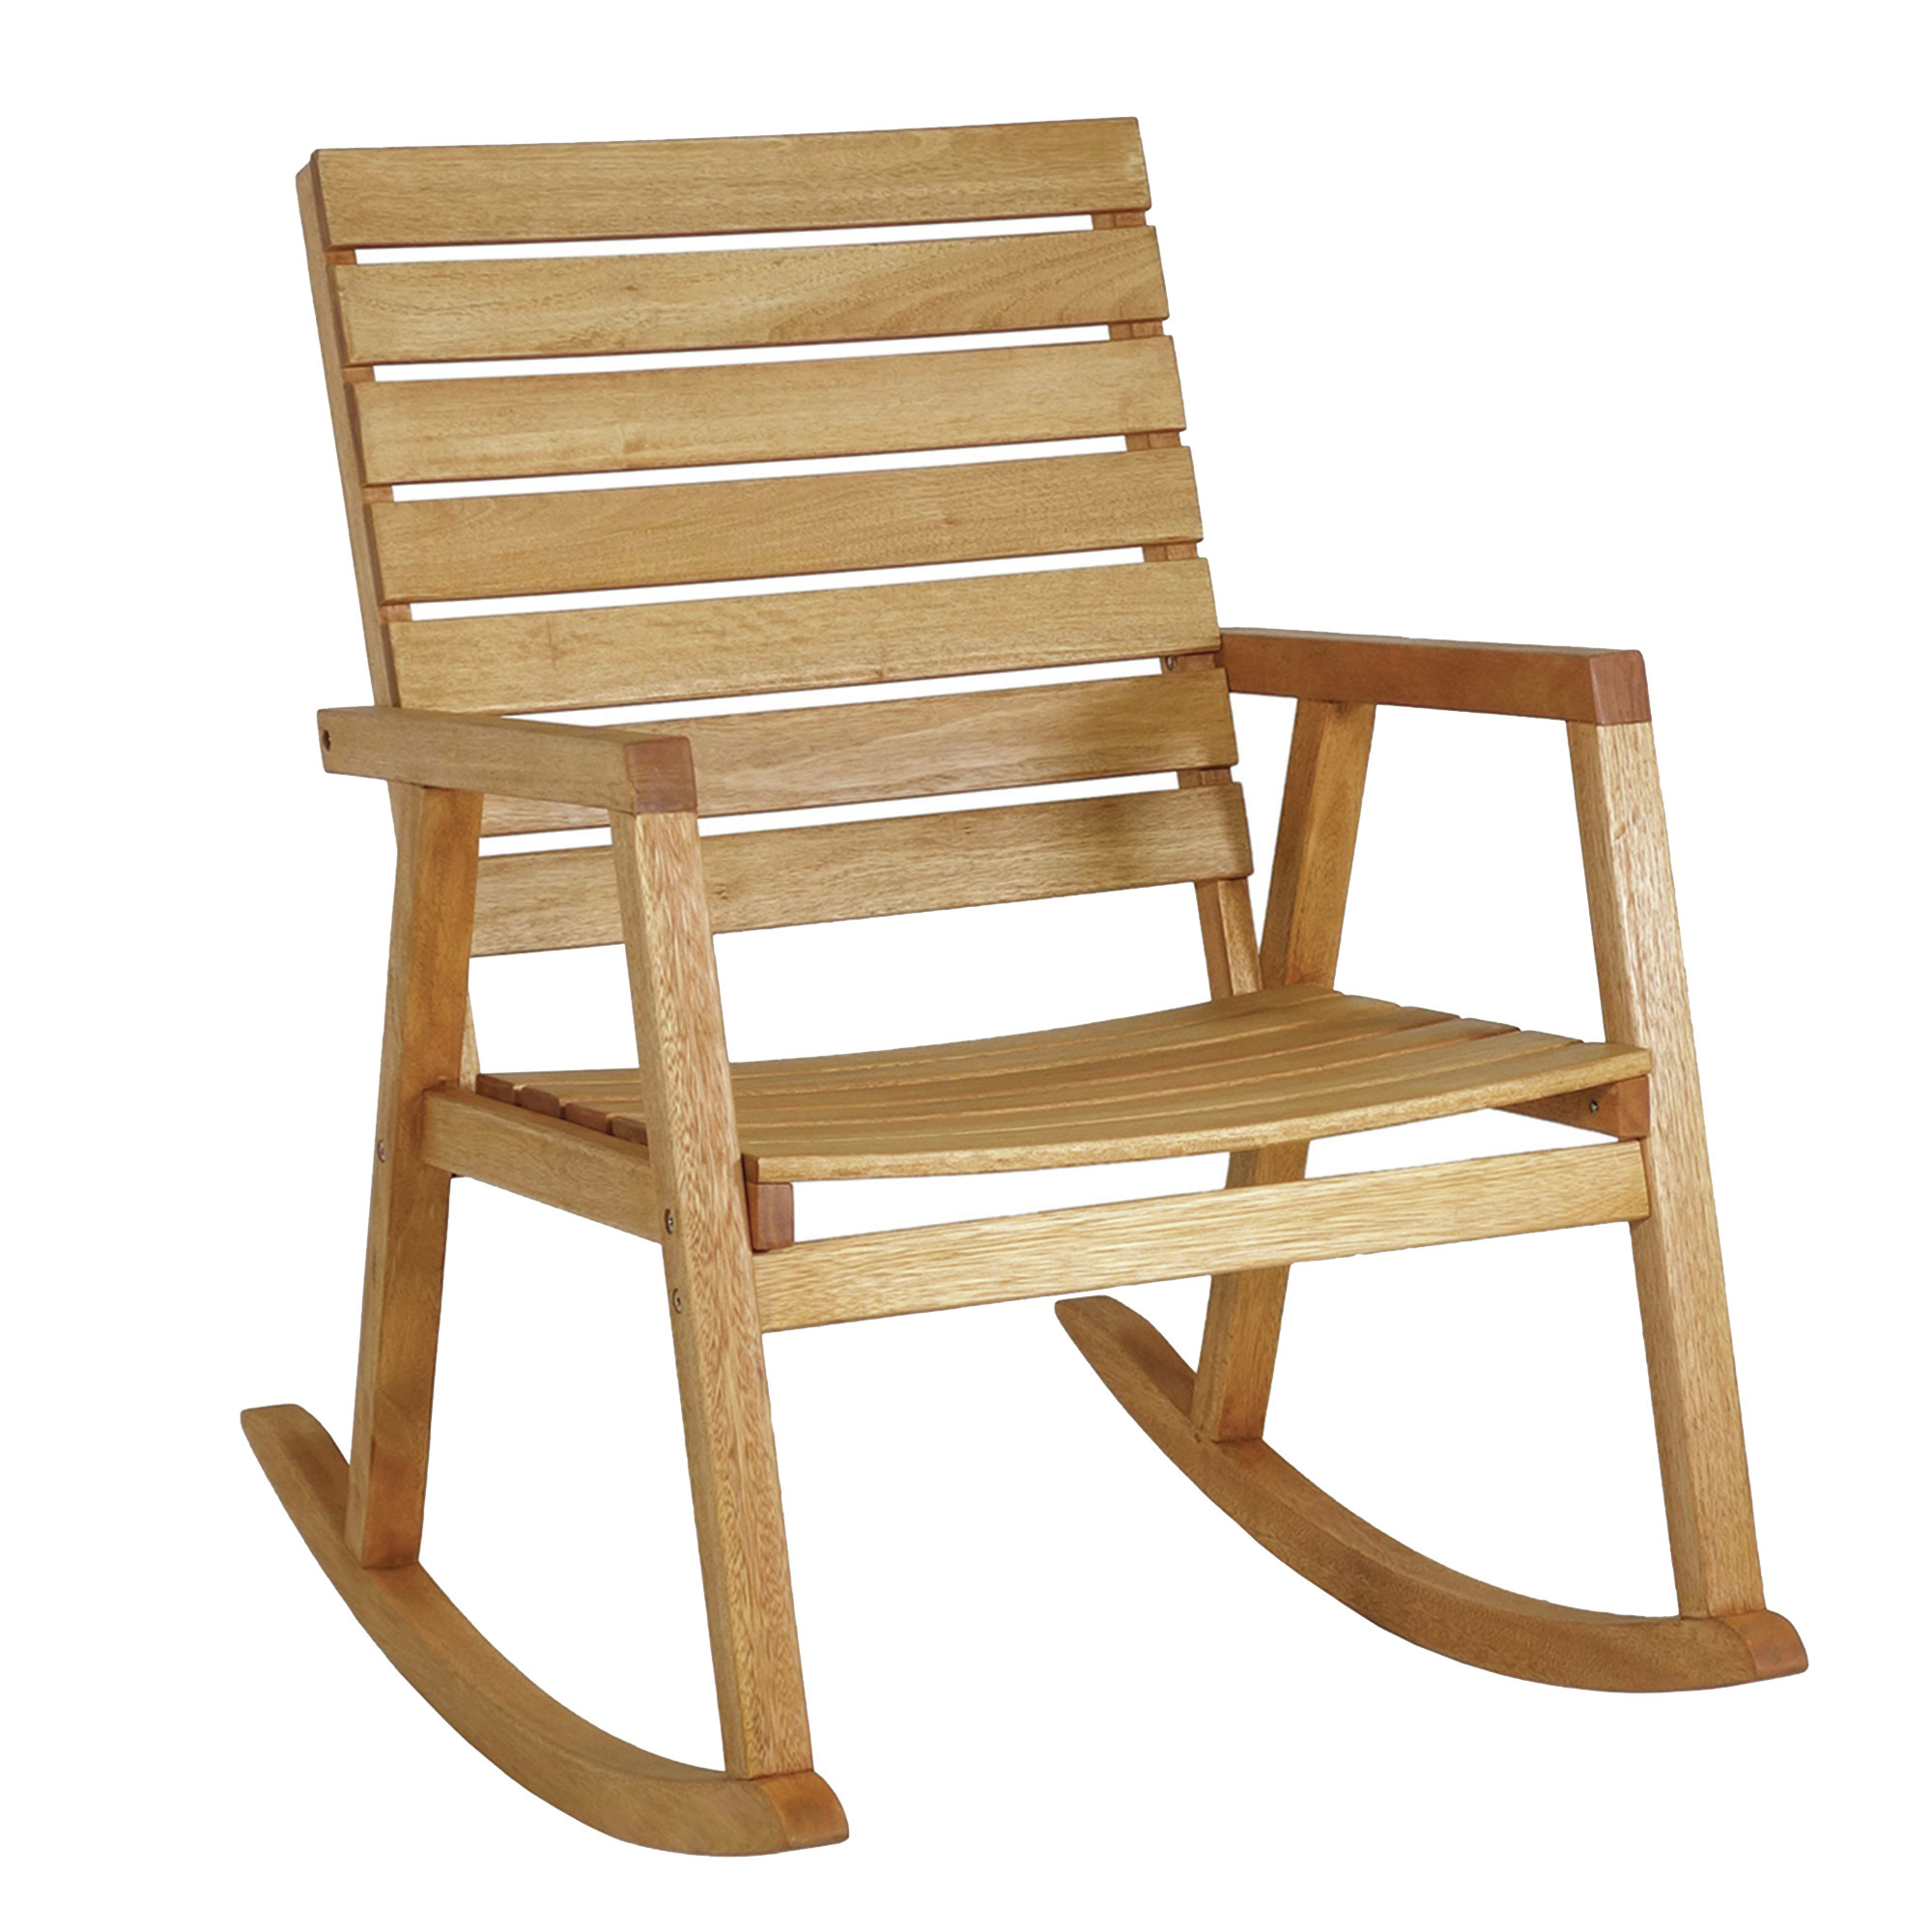 New Natural Texas Wooden Outdoor Rocking Chair Hartman Outdoor Chairs Ebay